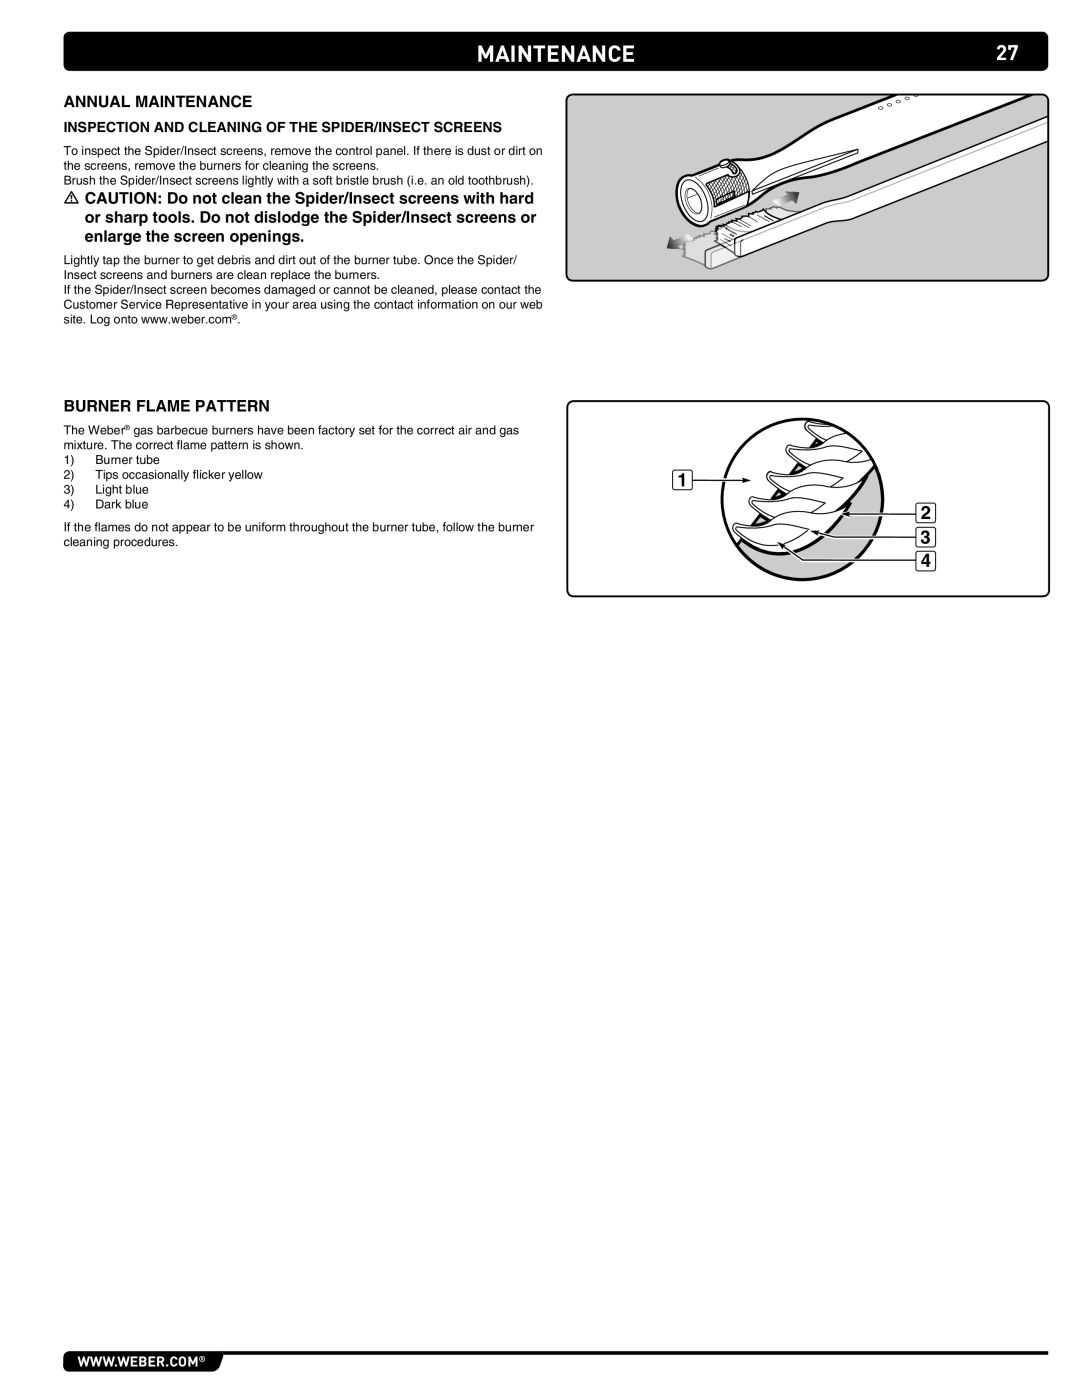 Weber S-460 manual Annual Maintenance, Burner Flame Pattern 